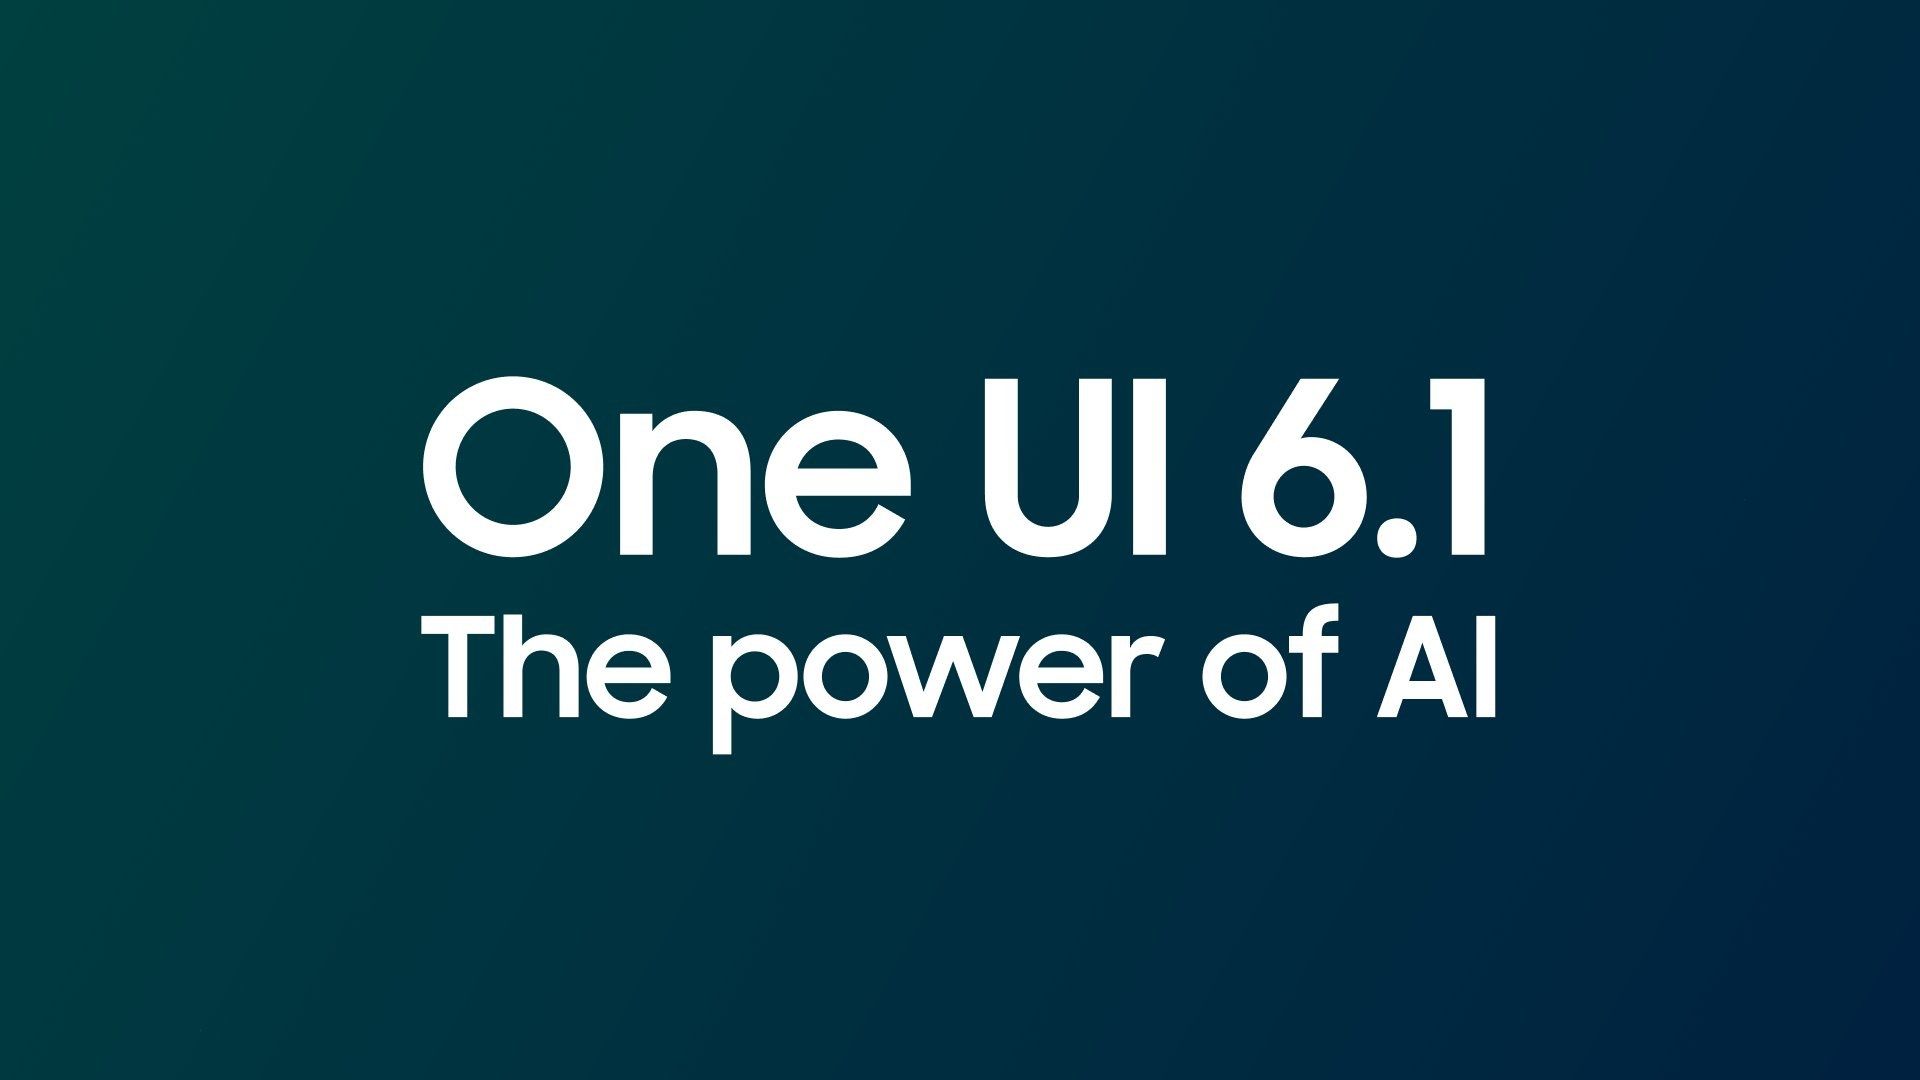 پوستر رابط کاربری one ui 6.1 با هوش مصنوعی